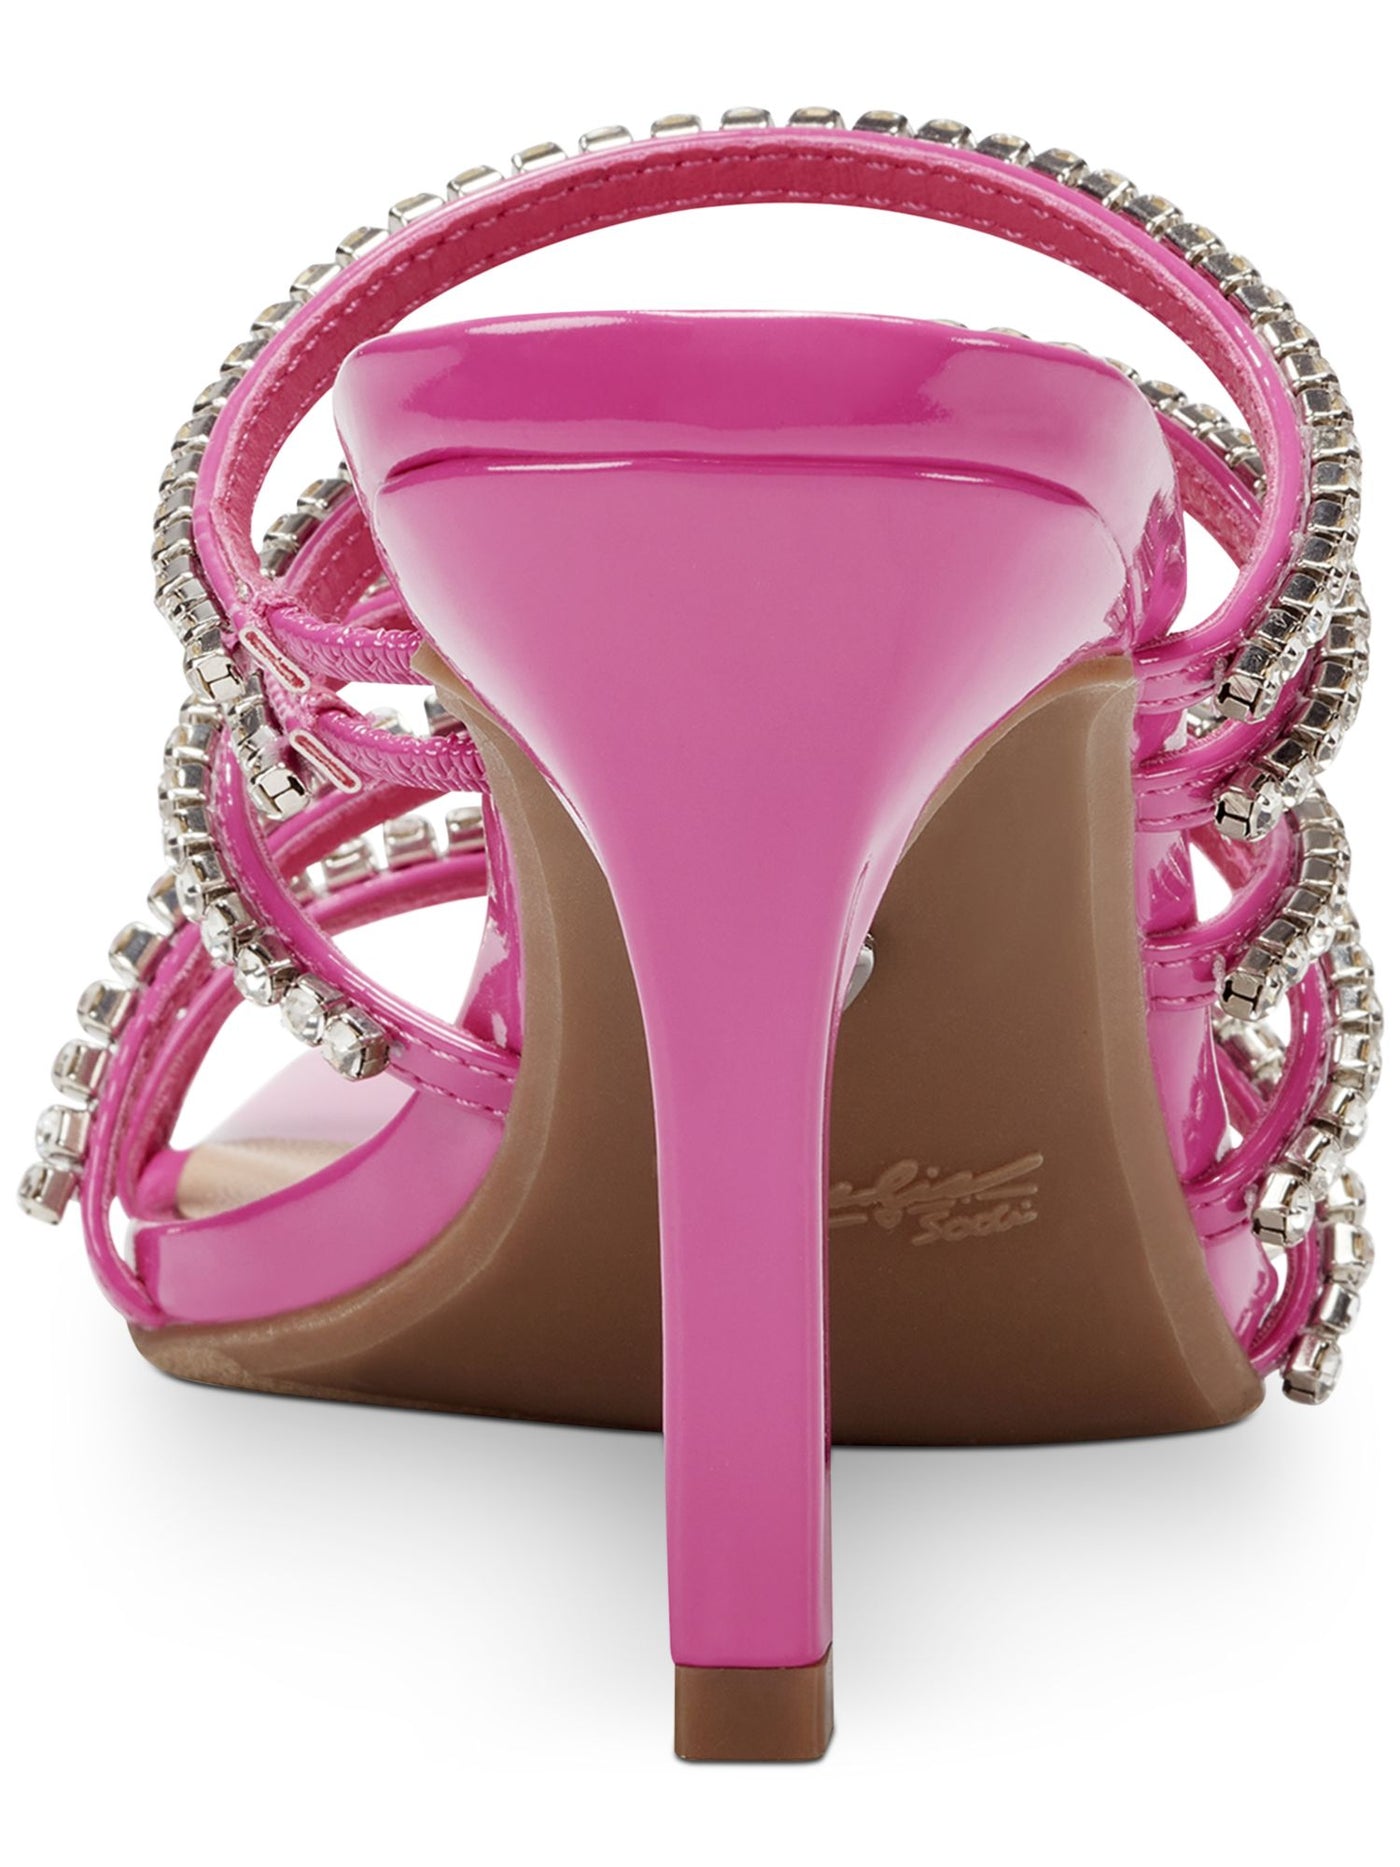 THALIA SODI Womens Pink Goring Padded Embellished Strappy Dahlia Square Toe Stiletto Slip On Dress Heeled Sandal 7.5 M